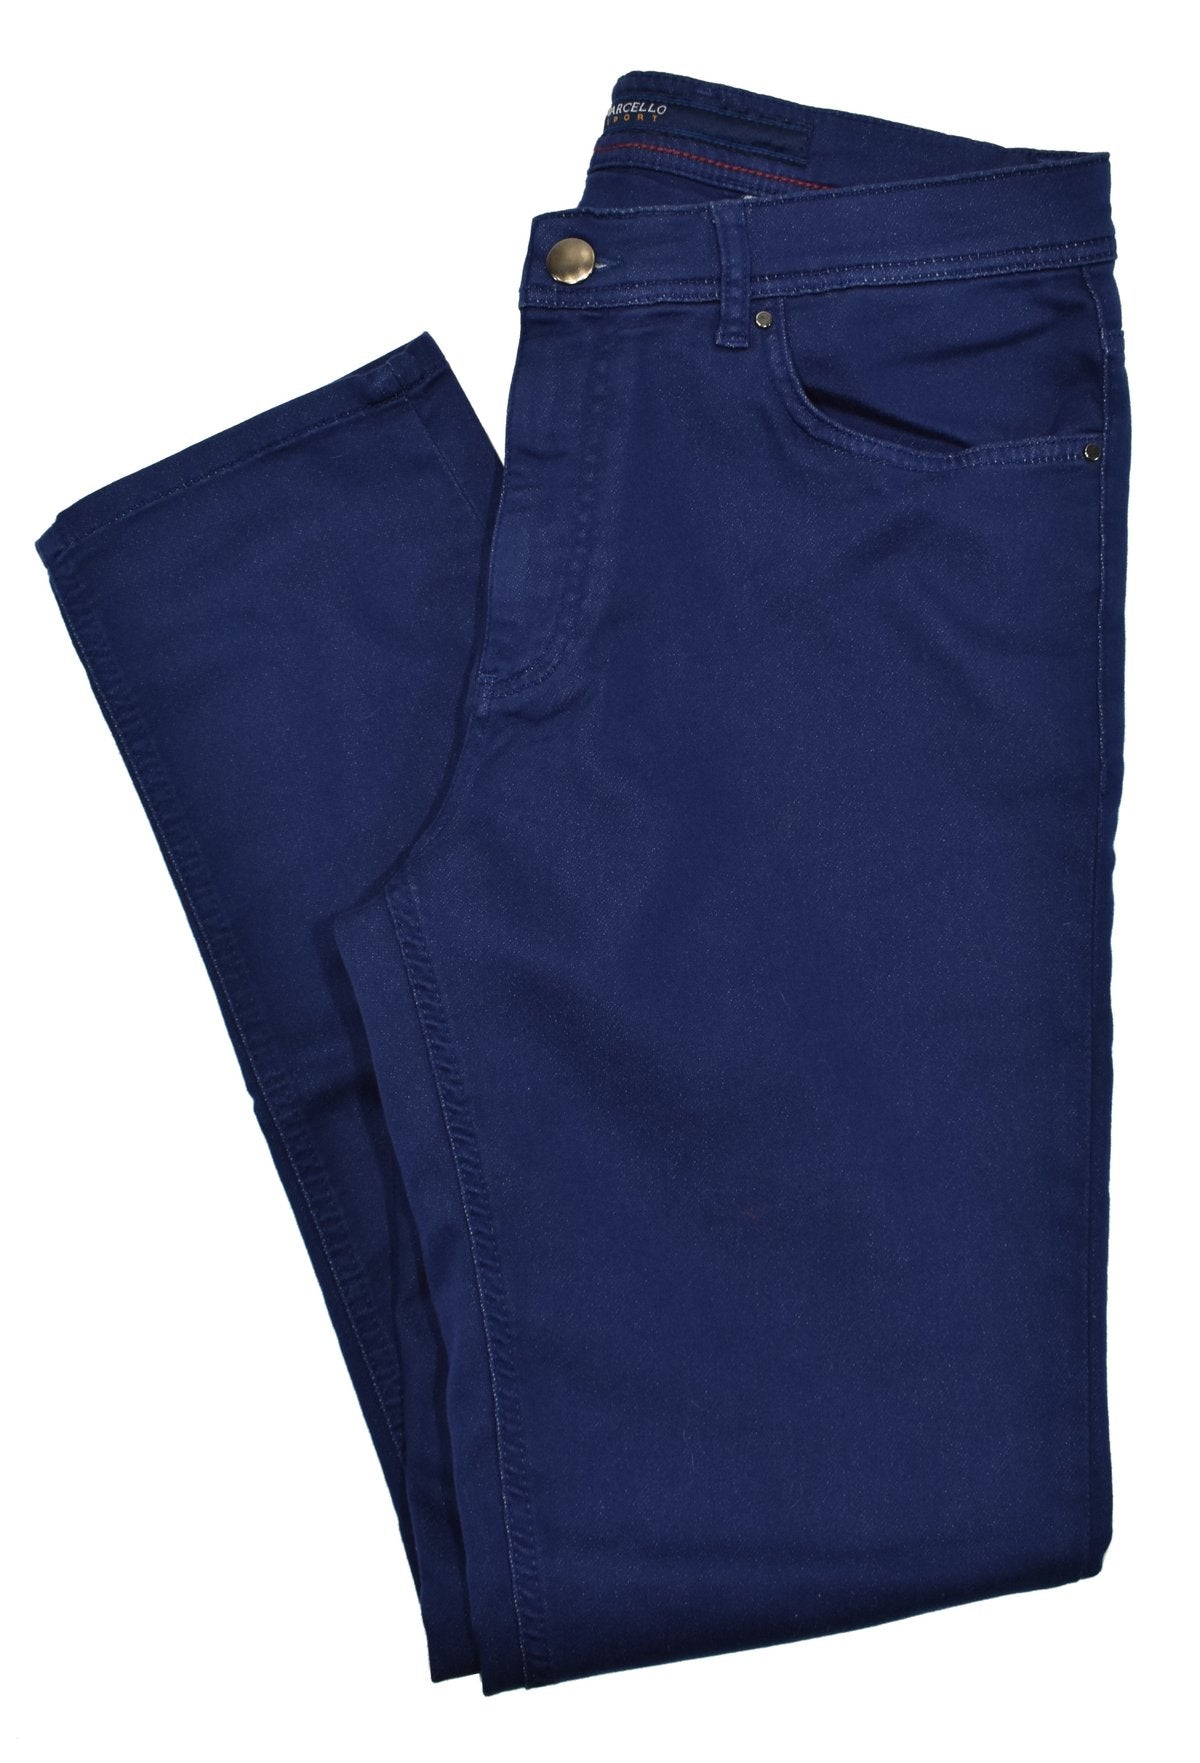 Amazon.com: VooZuGn Mens Skinny Jeans Stretch Pencil Pants Streetwear Slim  Fit Denim Jeans : Clothing, Shoes & Jewelry